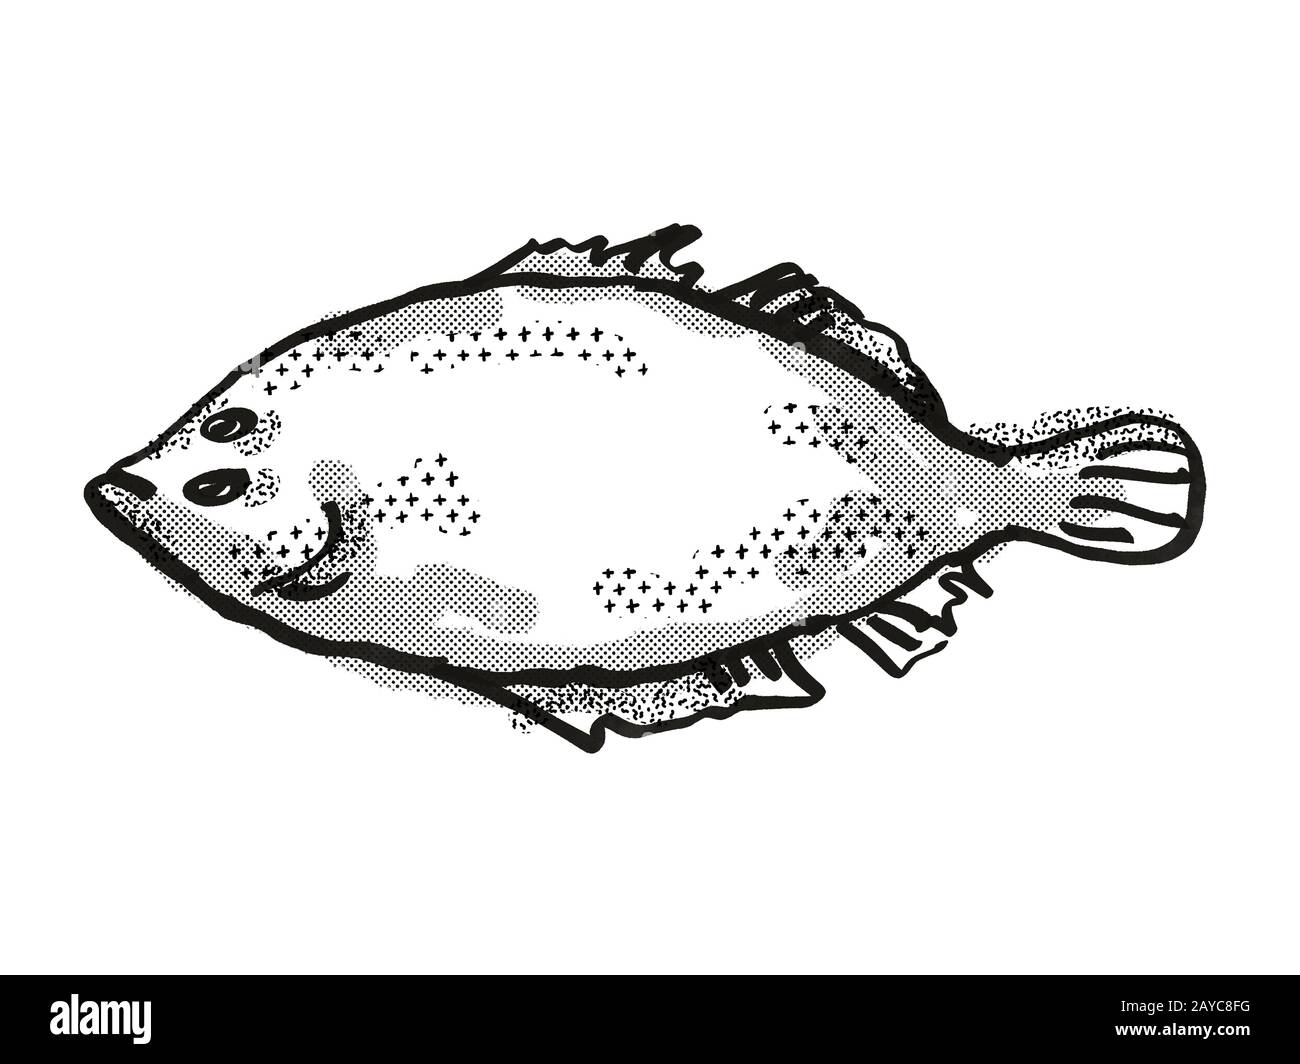 Lefteye Flounder Australian Fish Cartoon Retro Drawing Stock Photo